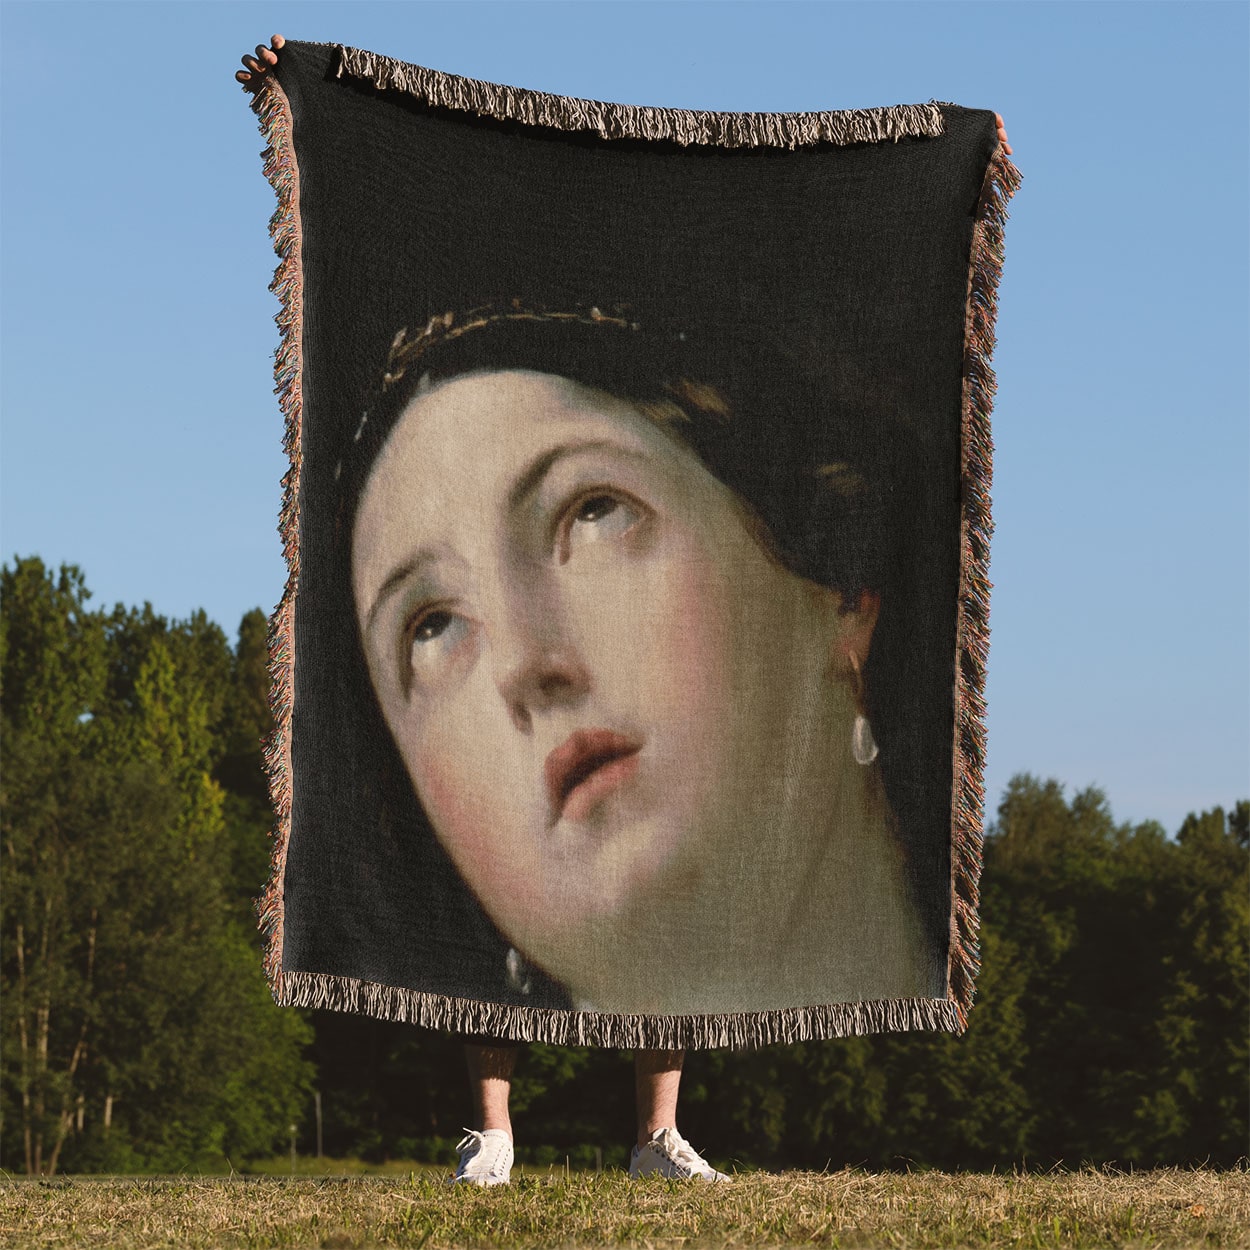 Moody Renaissance Portrait Woven Blanket Held on a Woman's Back Outside